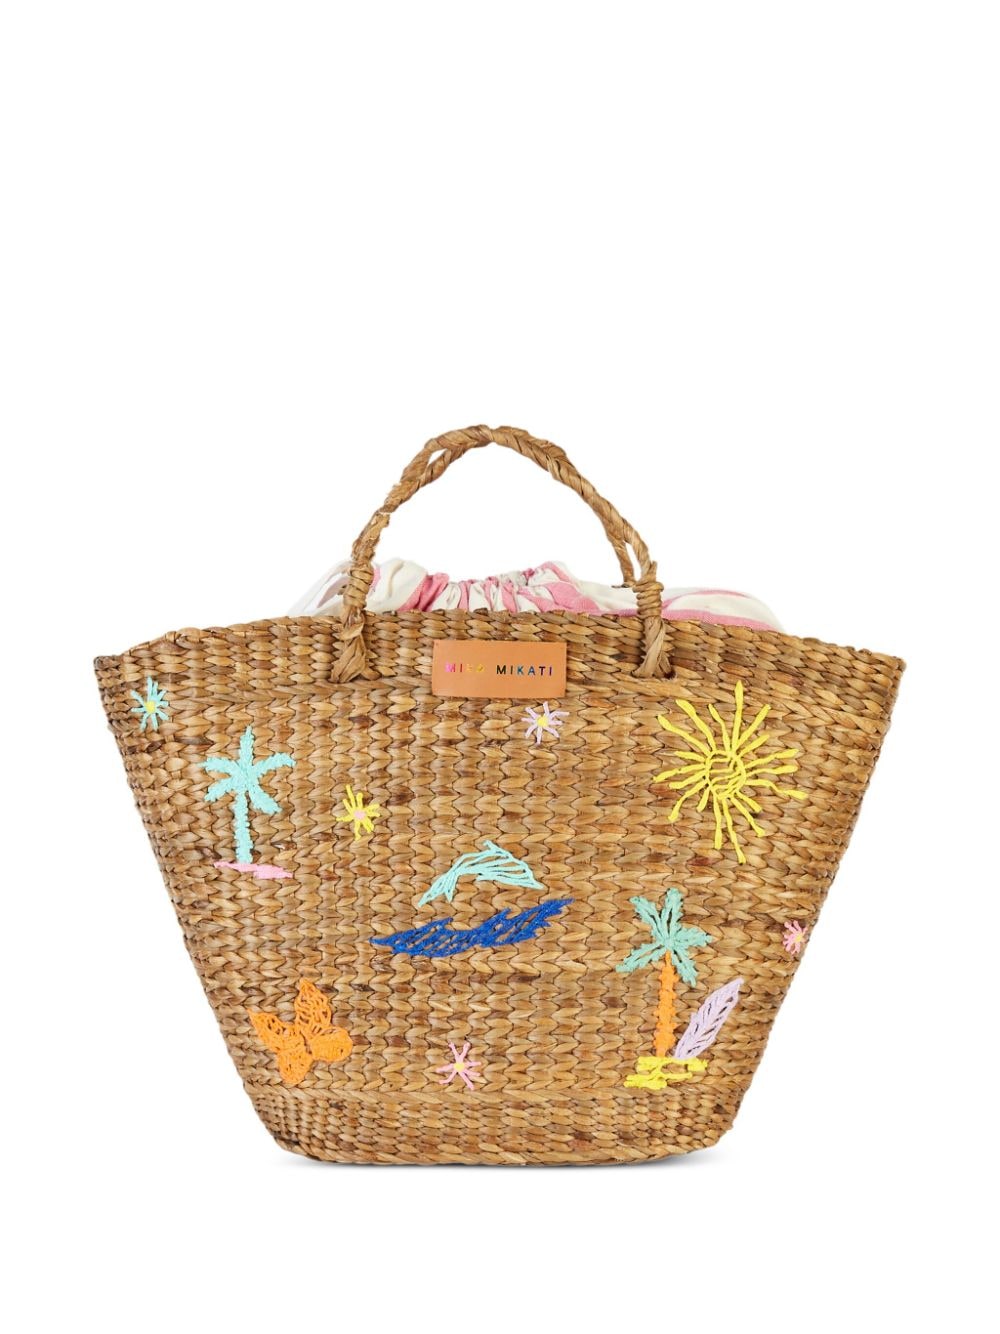 Mira Mikati embroidered beach bag - Nude